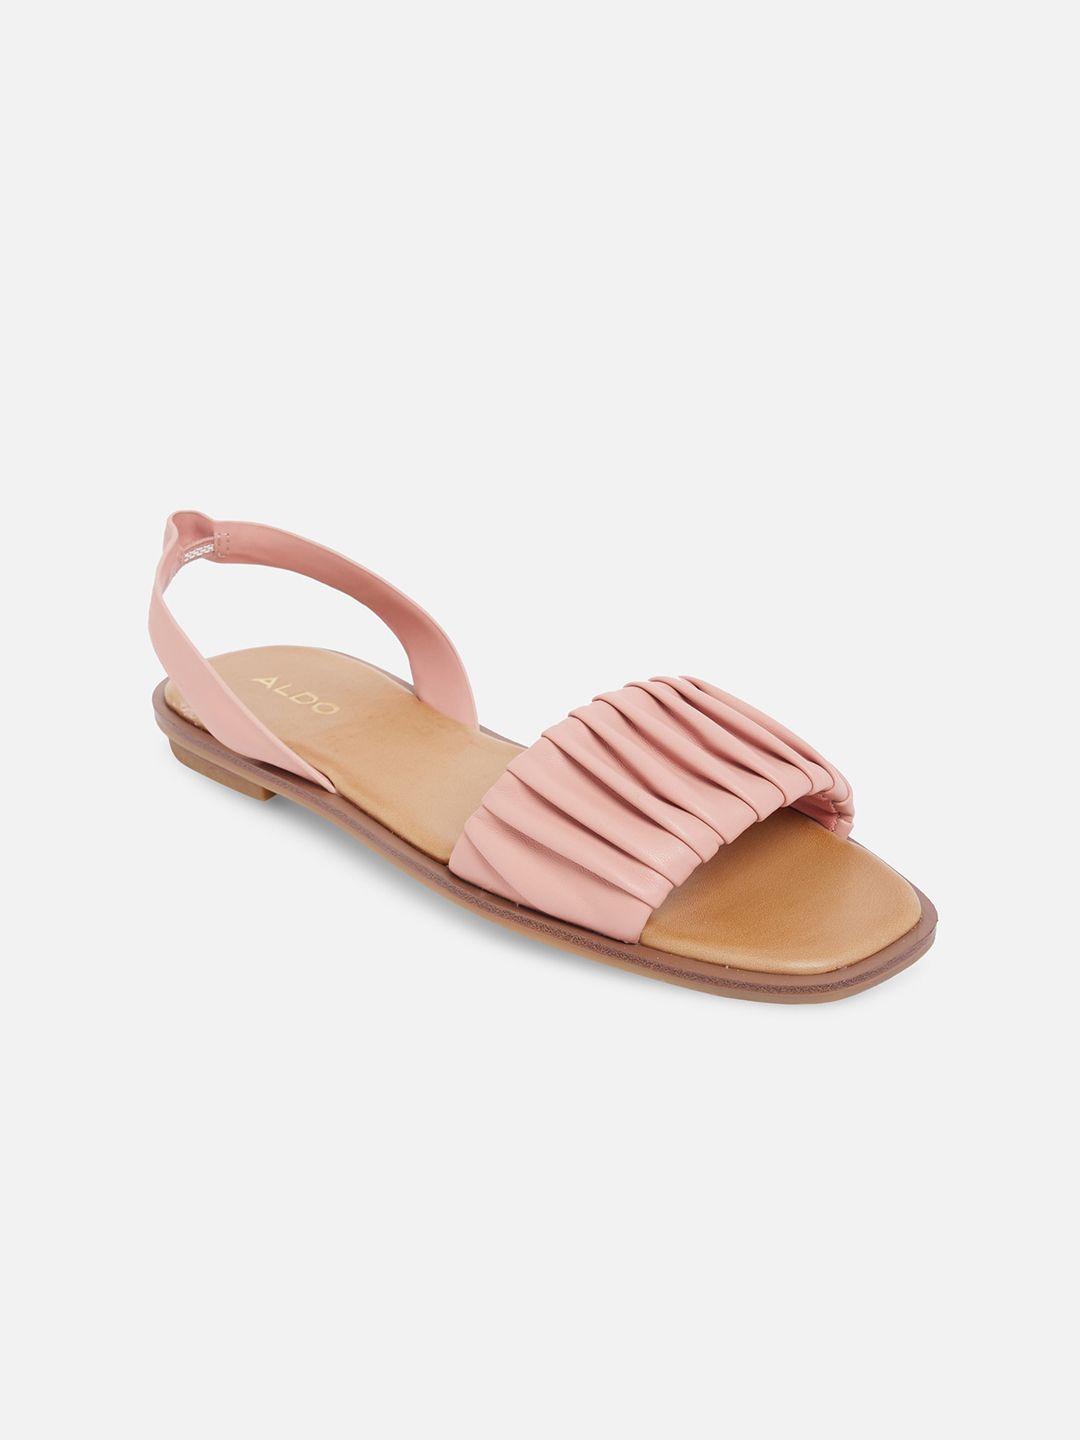 aldo women pink textured open toe flats